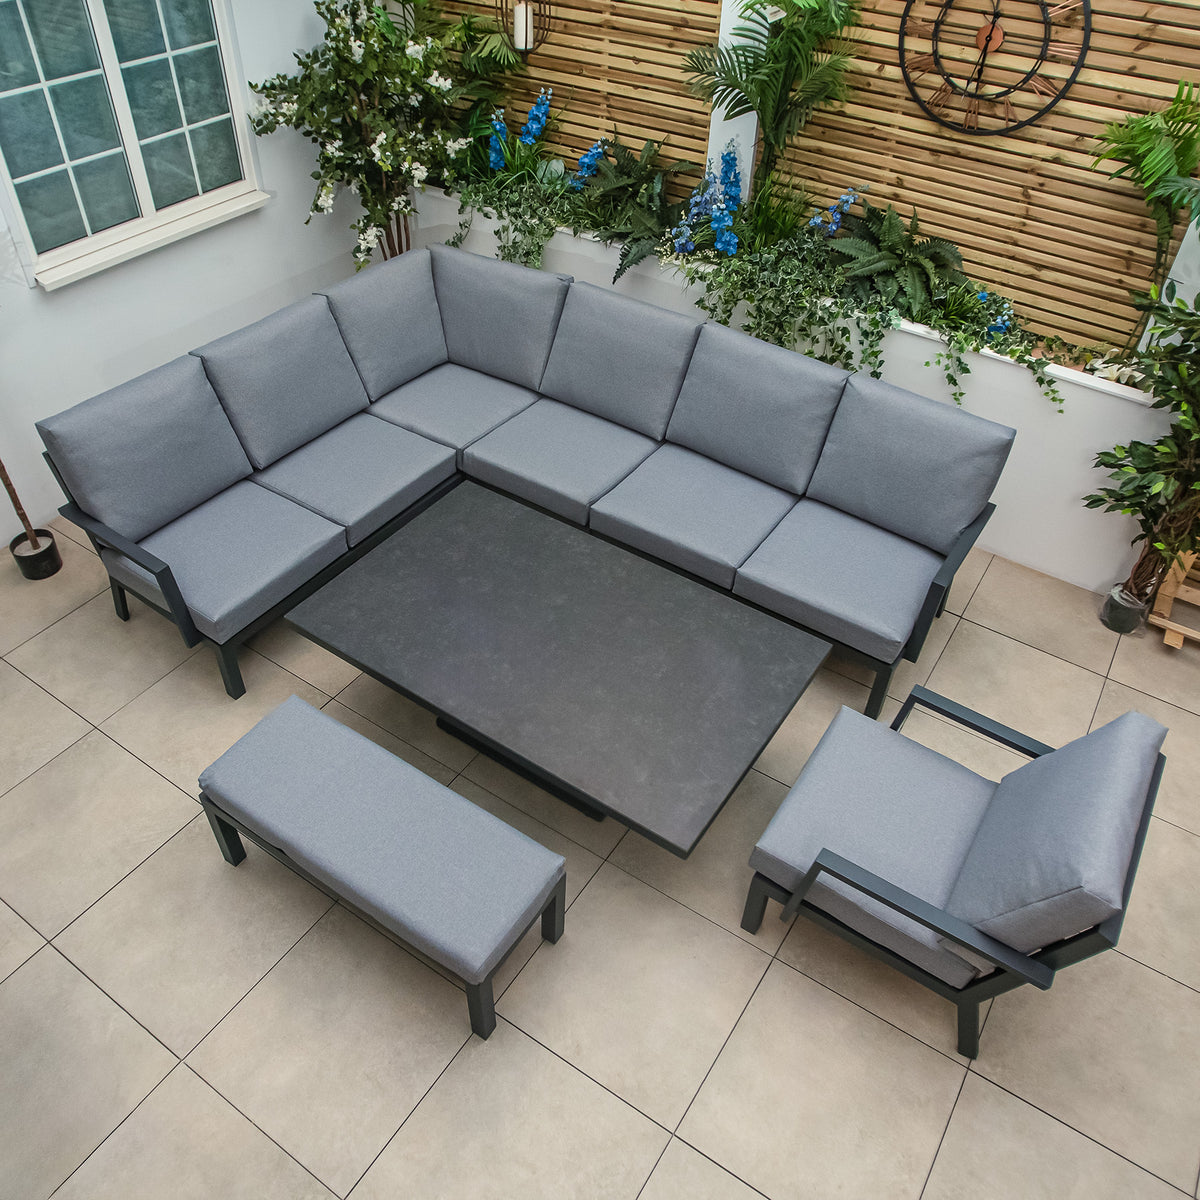 Bracken Outdoors Miami Dark Aluminium Rectangular Corner Set with Adjustable Table Bench and Armchair